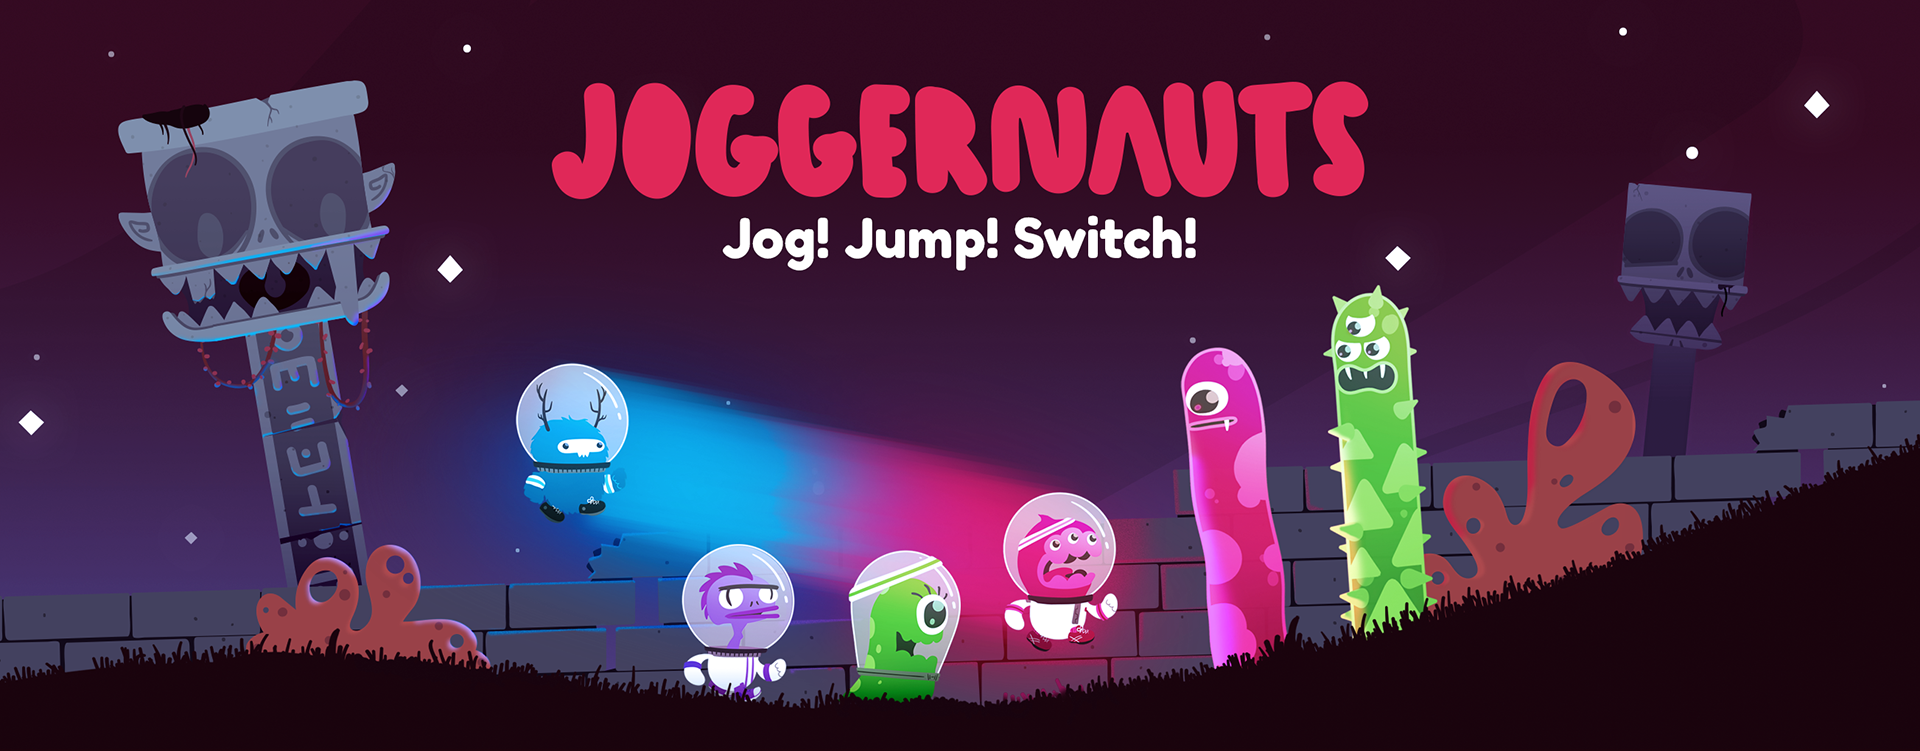 Joggernauts: Jog. Jump. Switch.